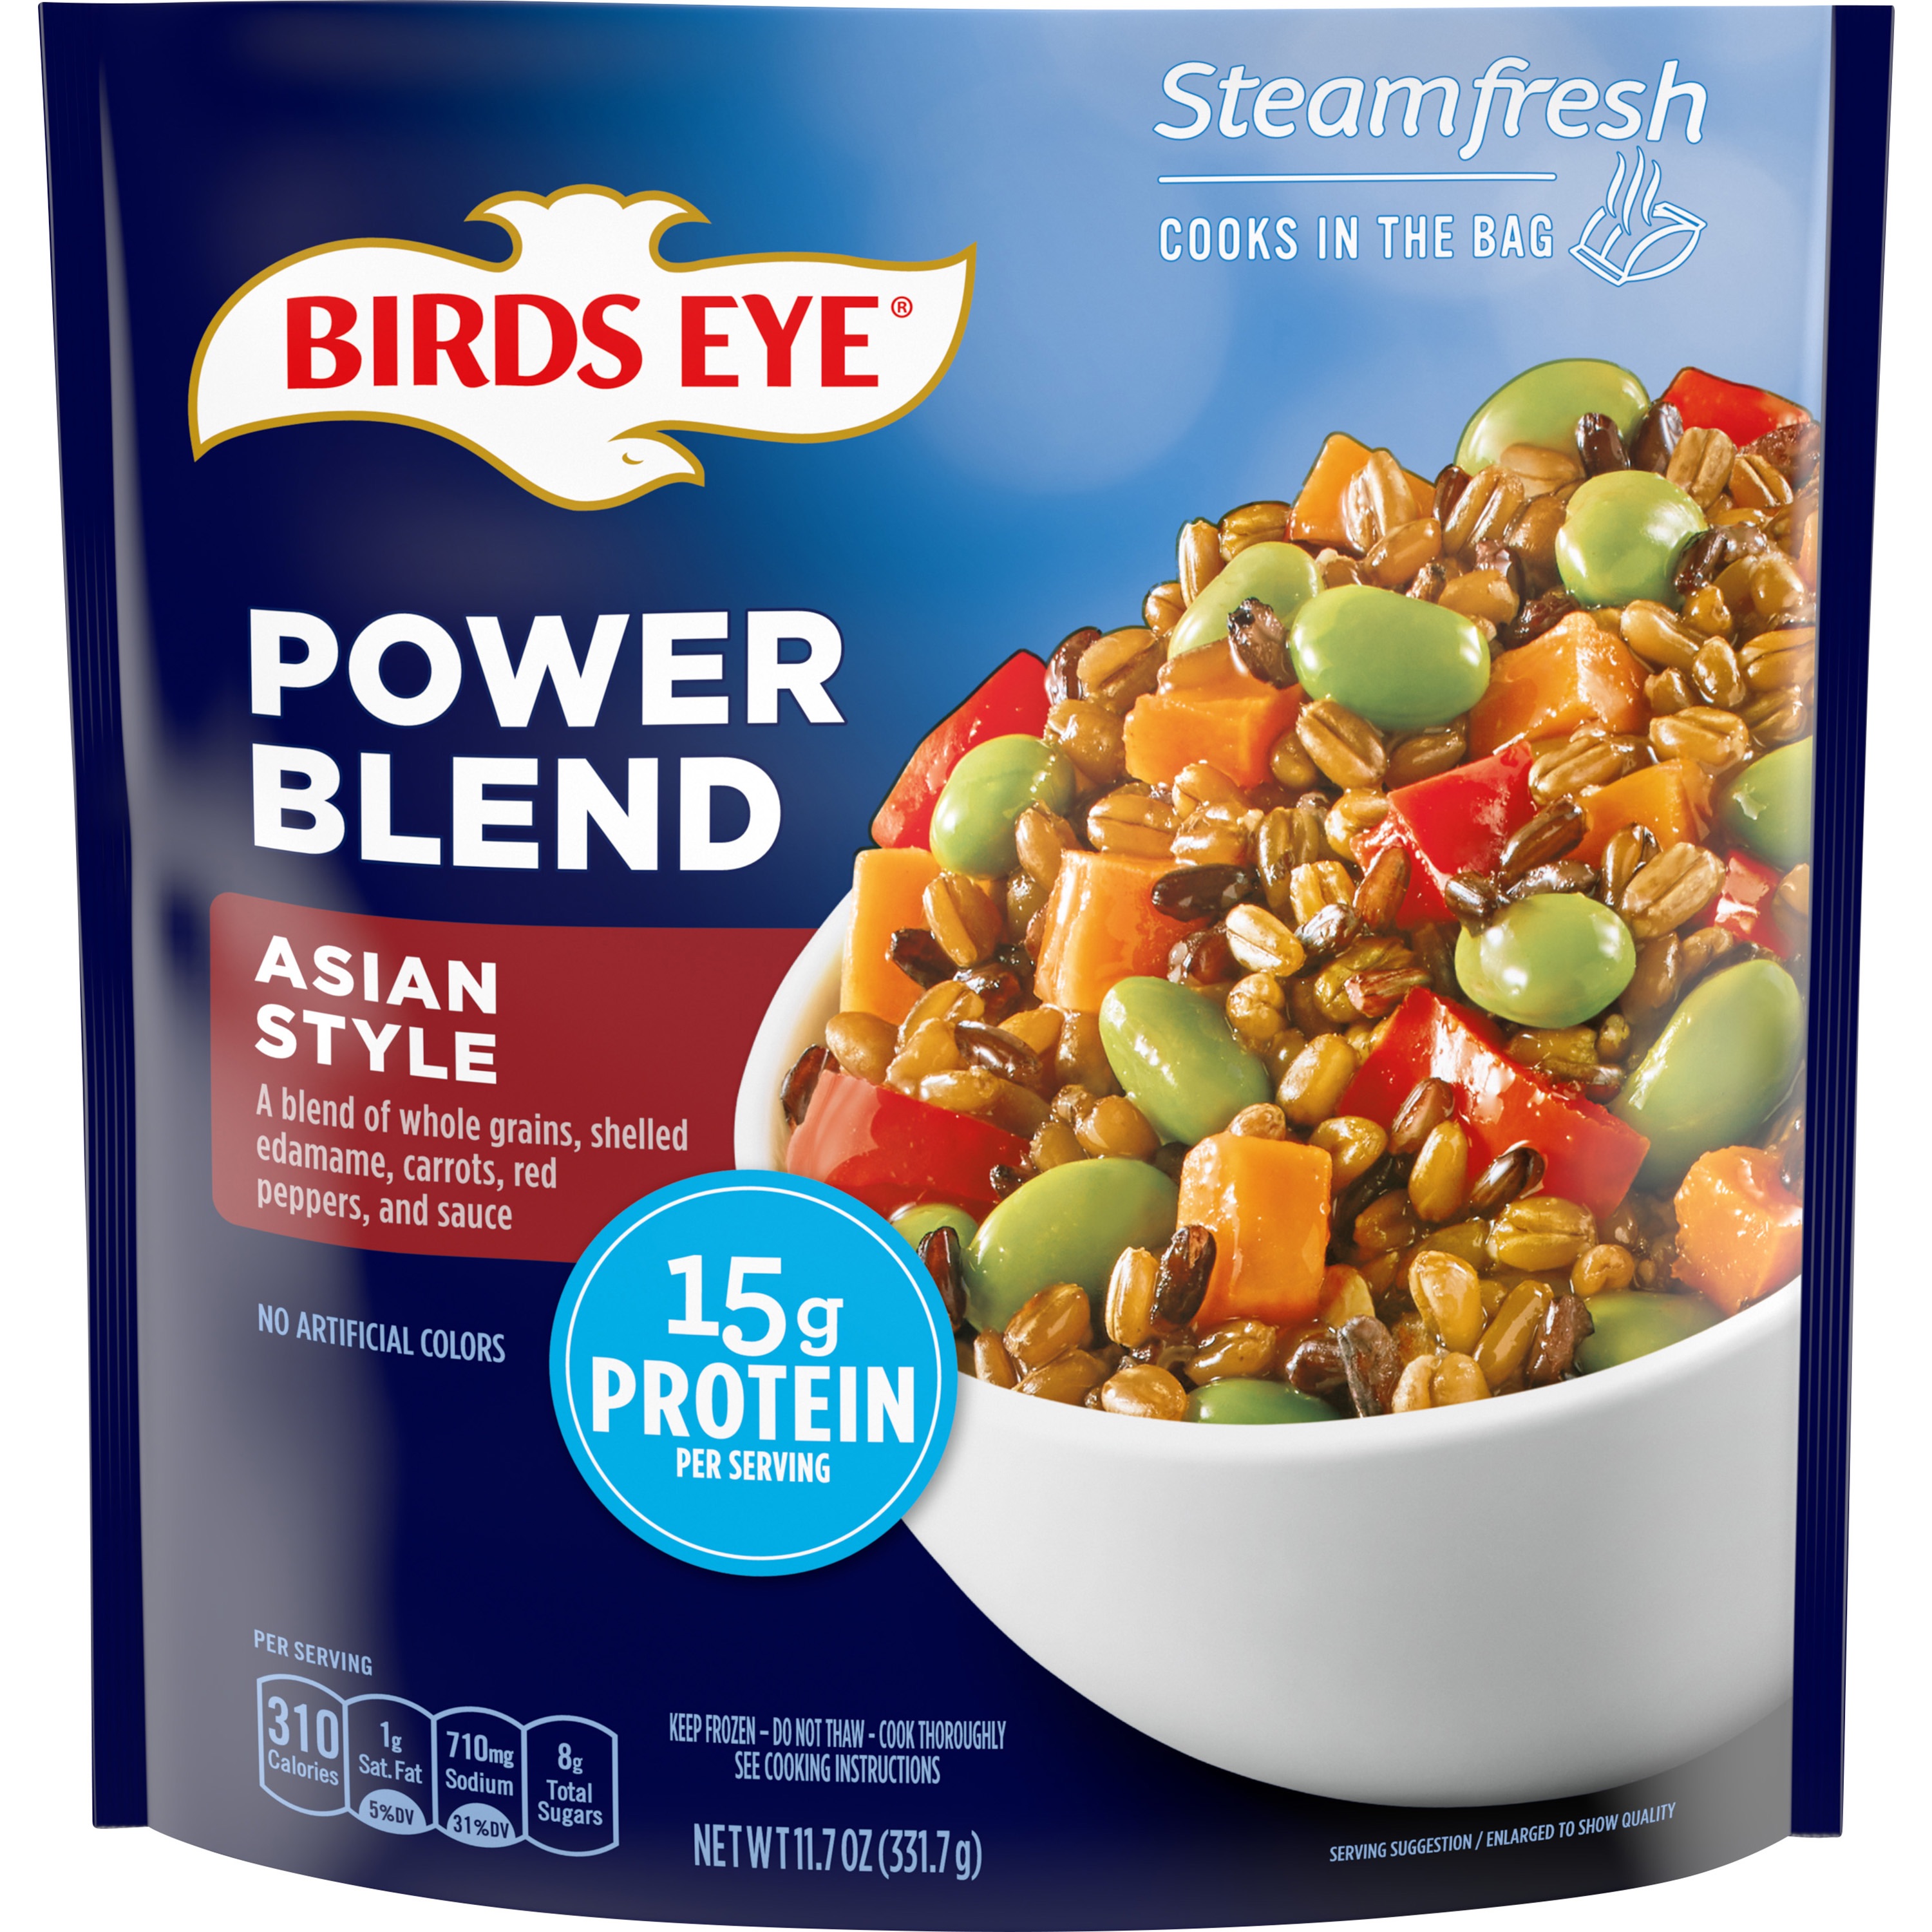 Birds Eye Steamfresh Protein Blends Asian Style